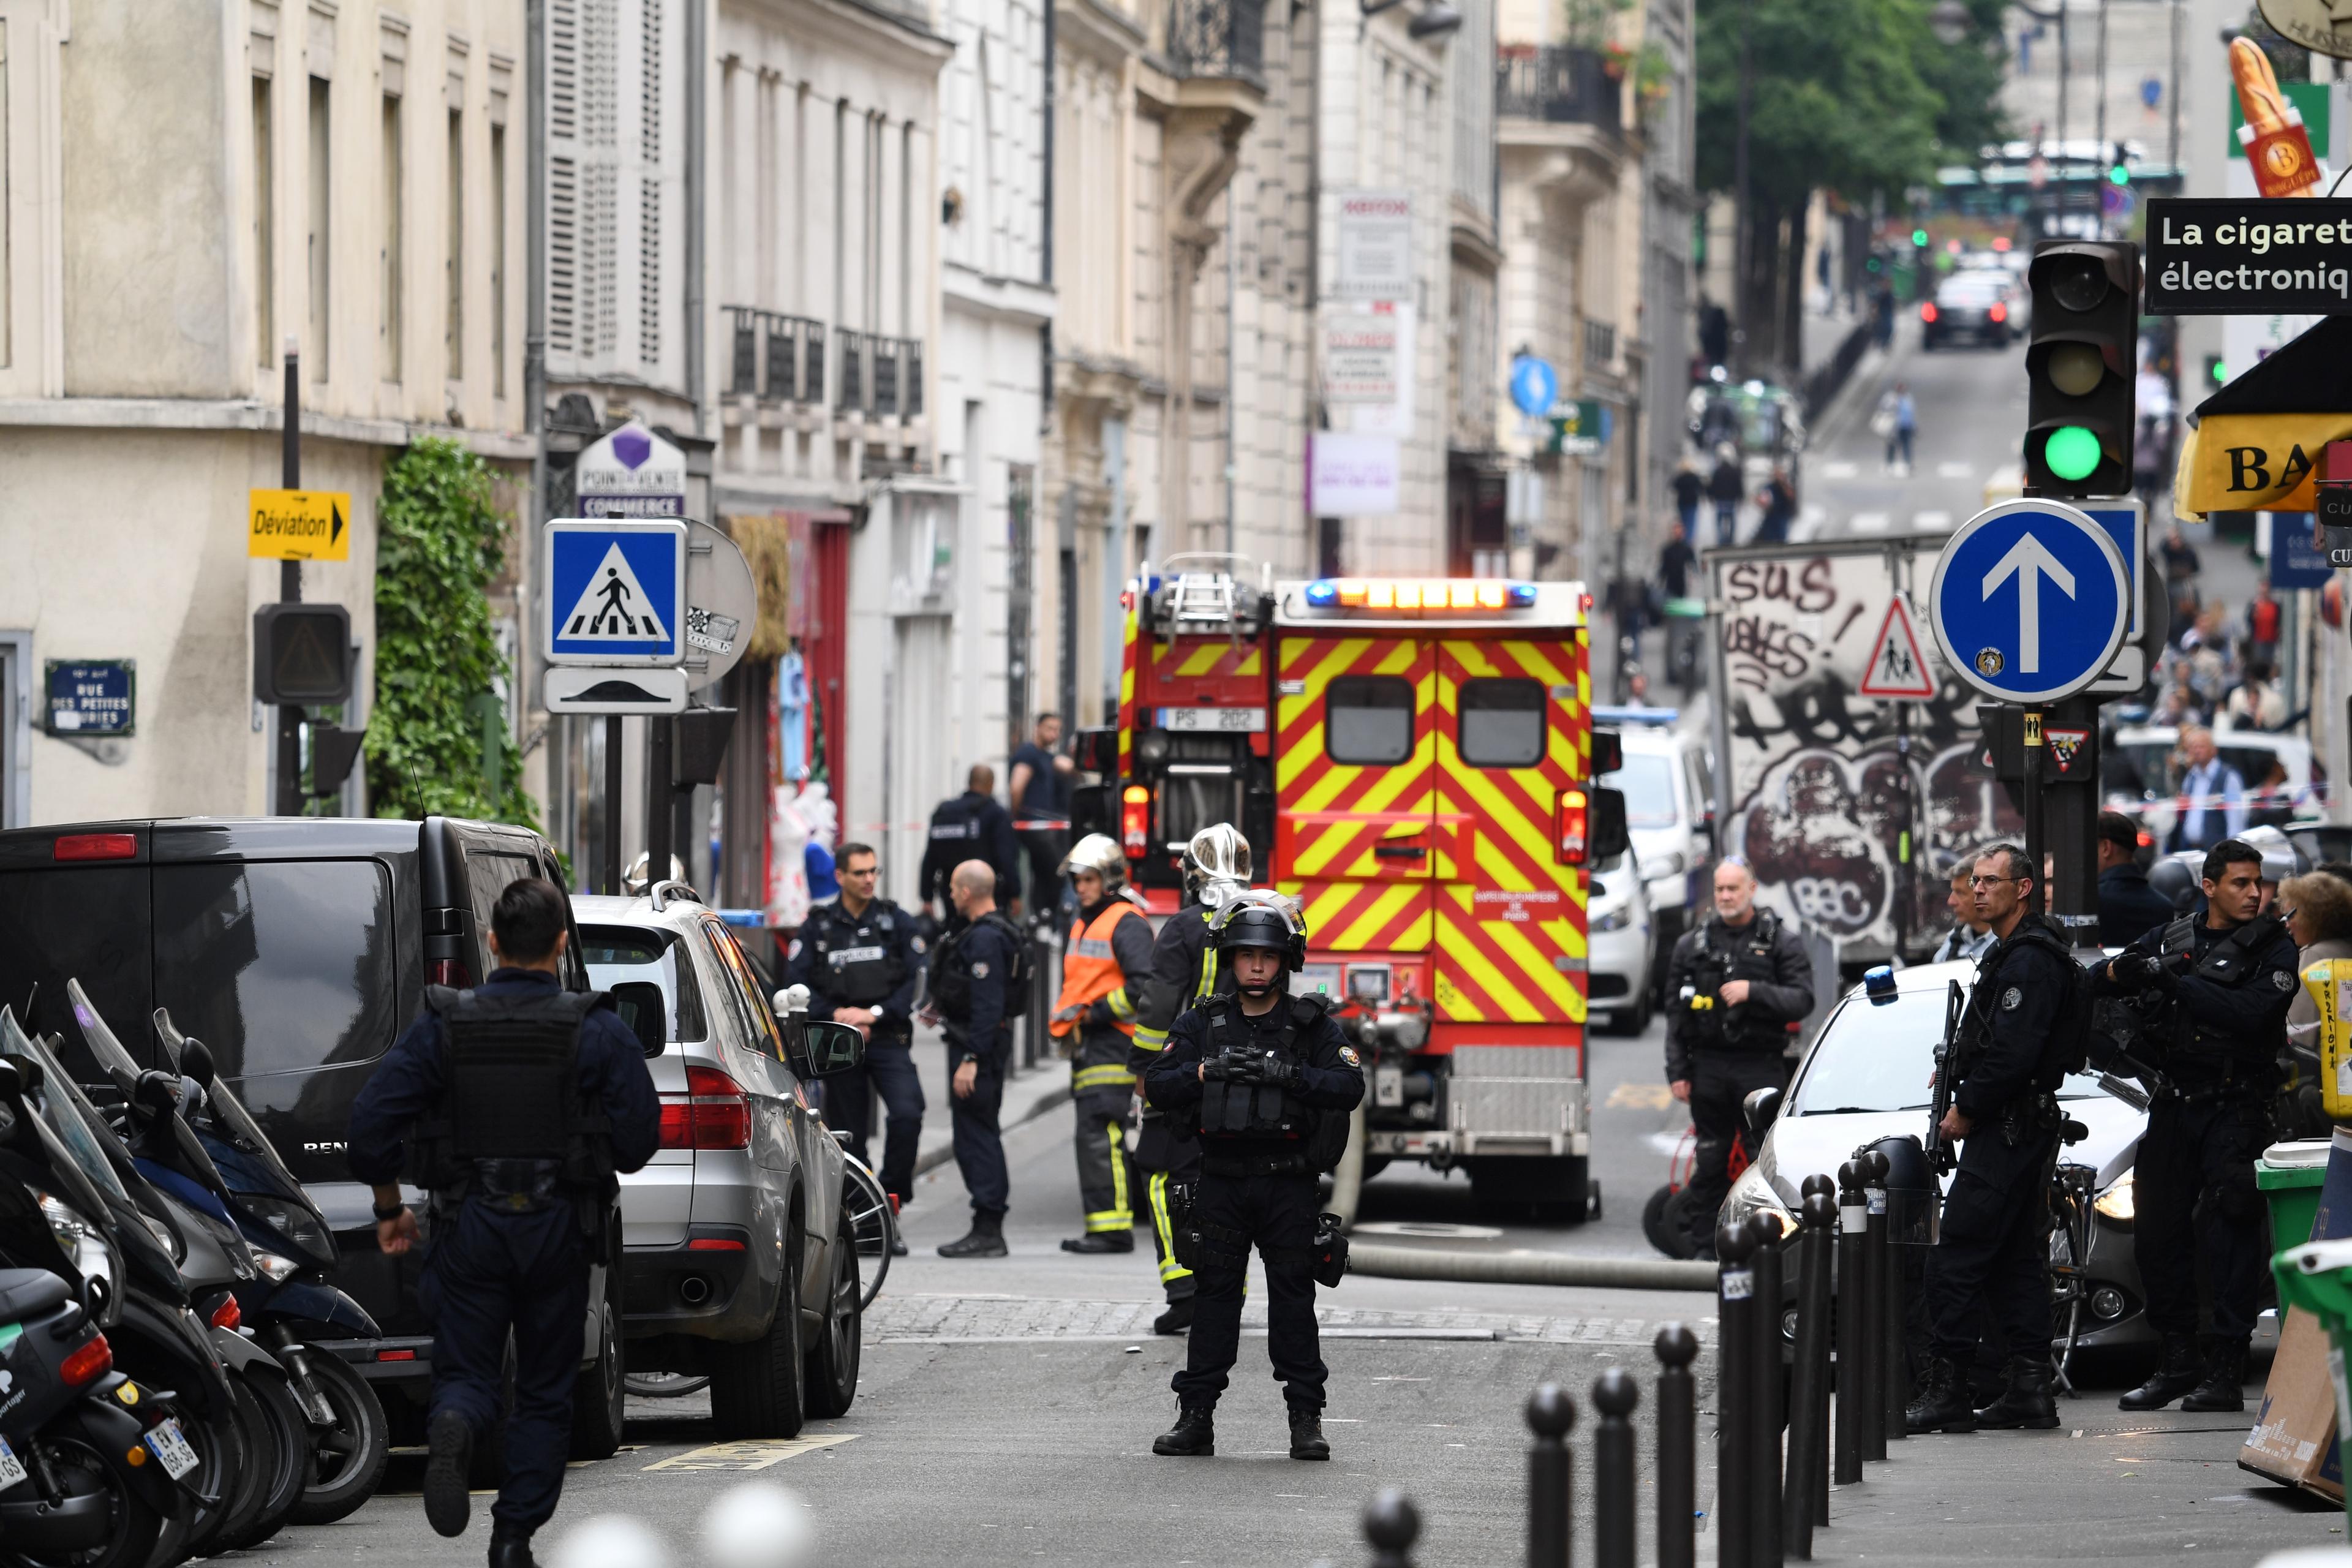 Talačka kriza u Parizu: Muškarac naoružan bombom i pištoljem drži troje talaca, među njima i trudnicu